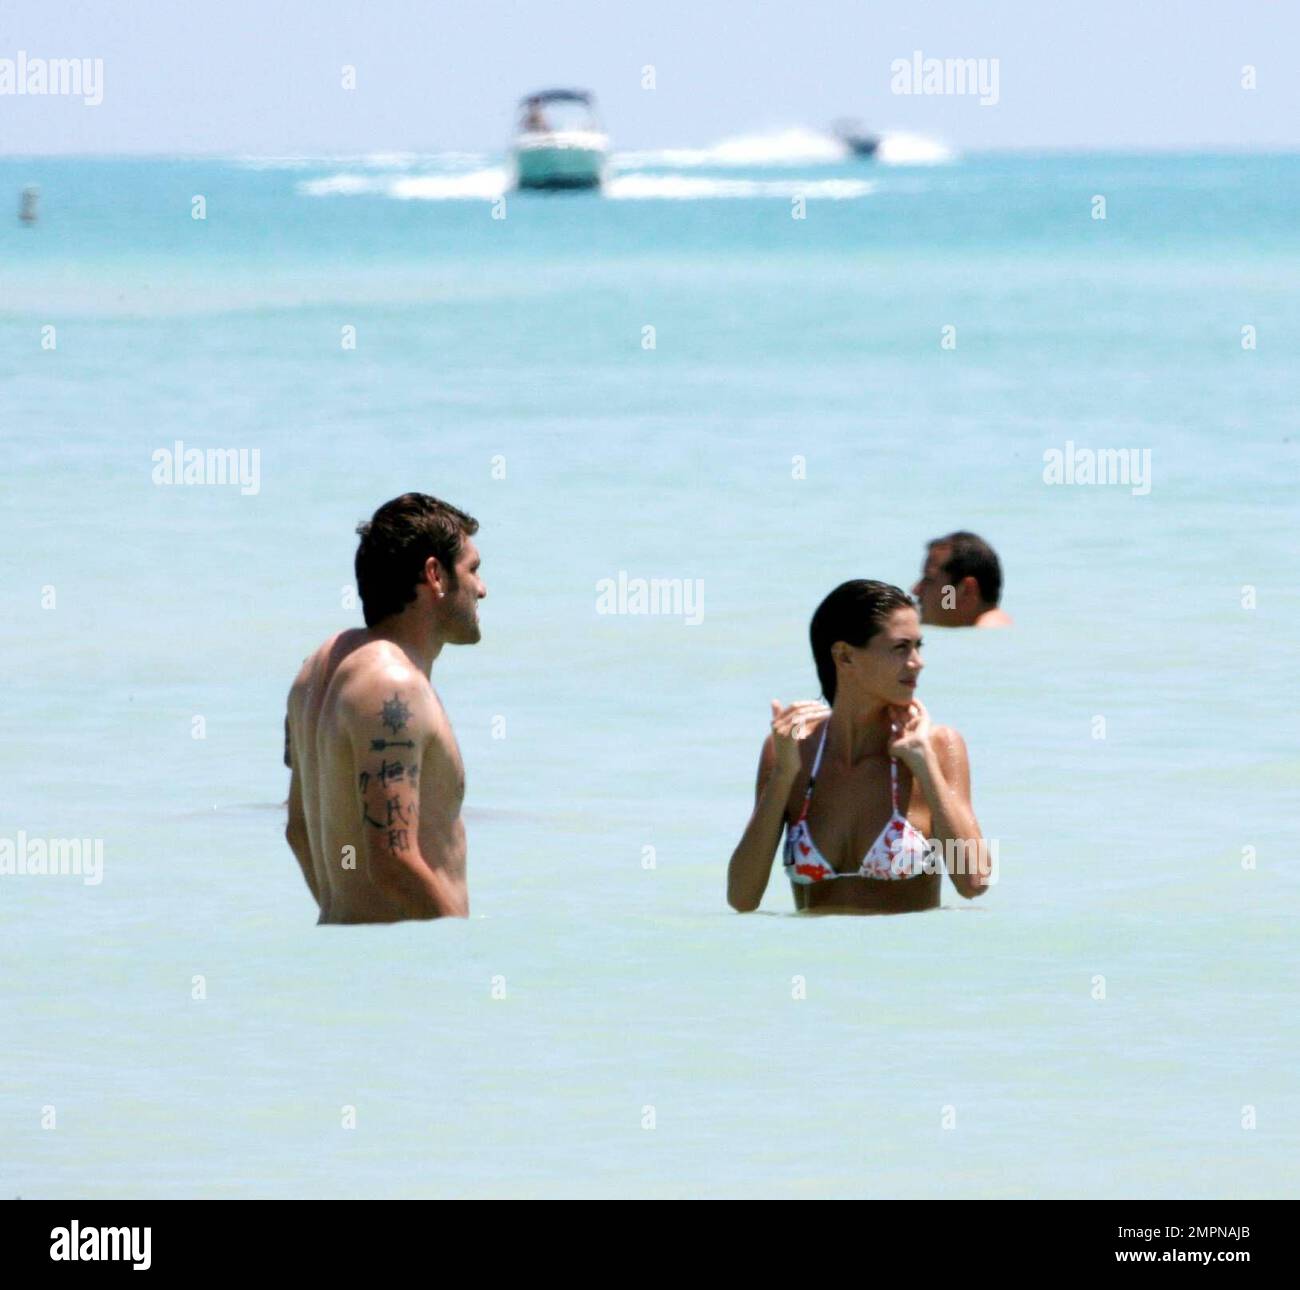 Italian soccer star Christian 'Bobo' Vieri and super hot girlfriend Melissa Satta enjoy the sun and surf on Miami Beach, Fla. 6/3/07. Stock Photo